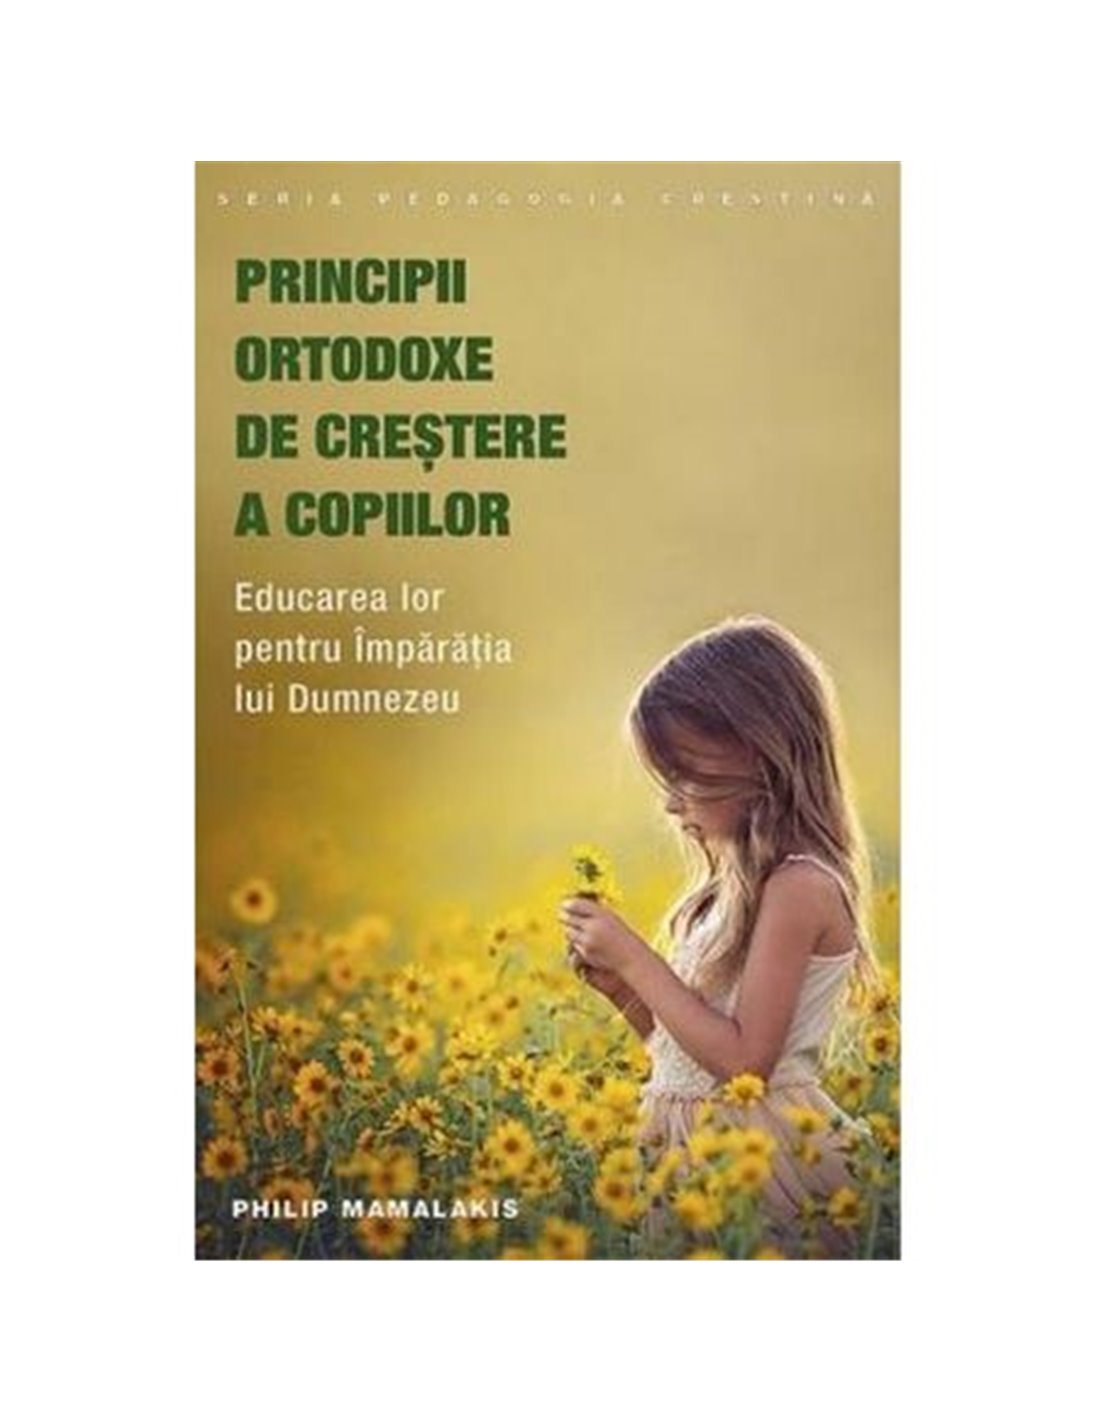 Principii ortodoxe de crestere a copiilor - Philip Mamalakis | Editura Sophia